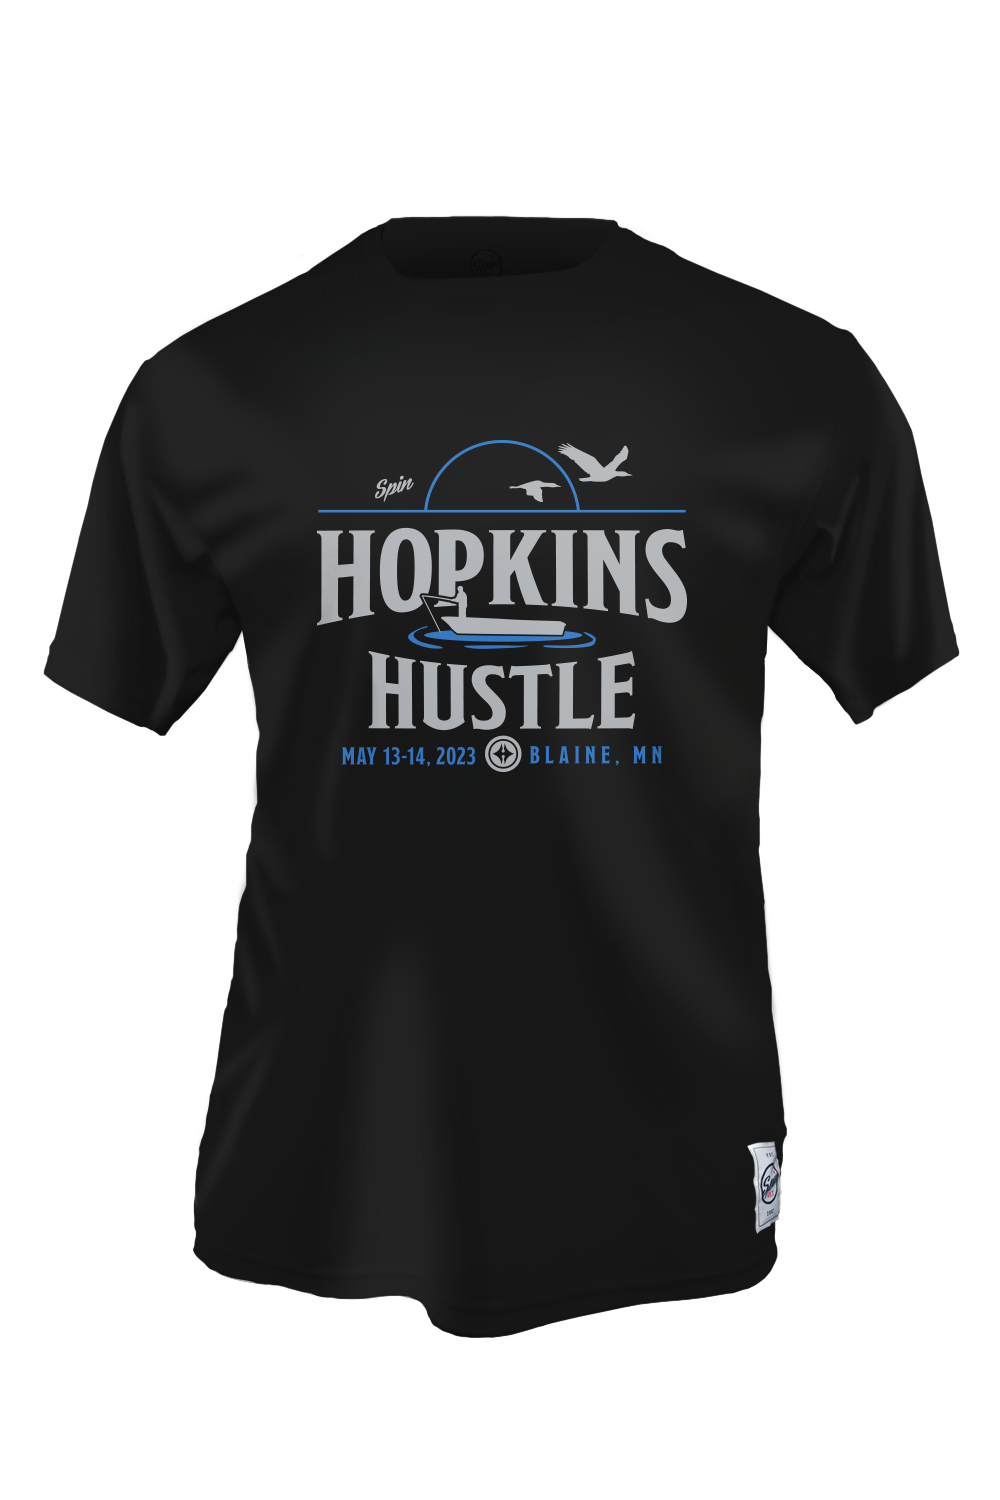 Hopkins Hustle 2023 Boating Short Sleeve